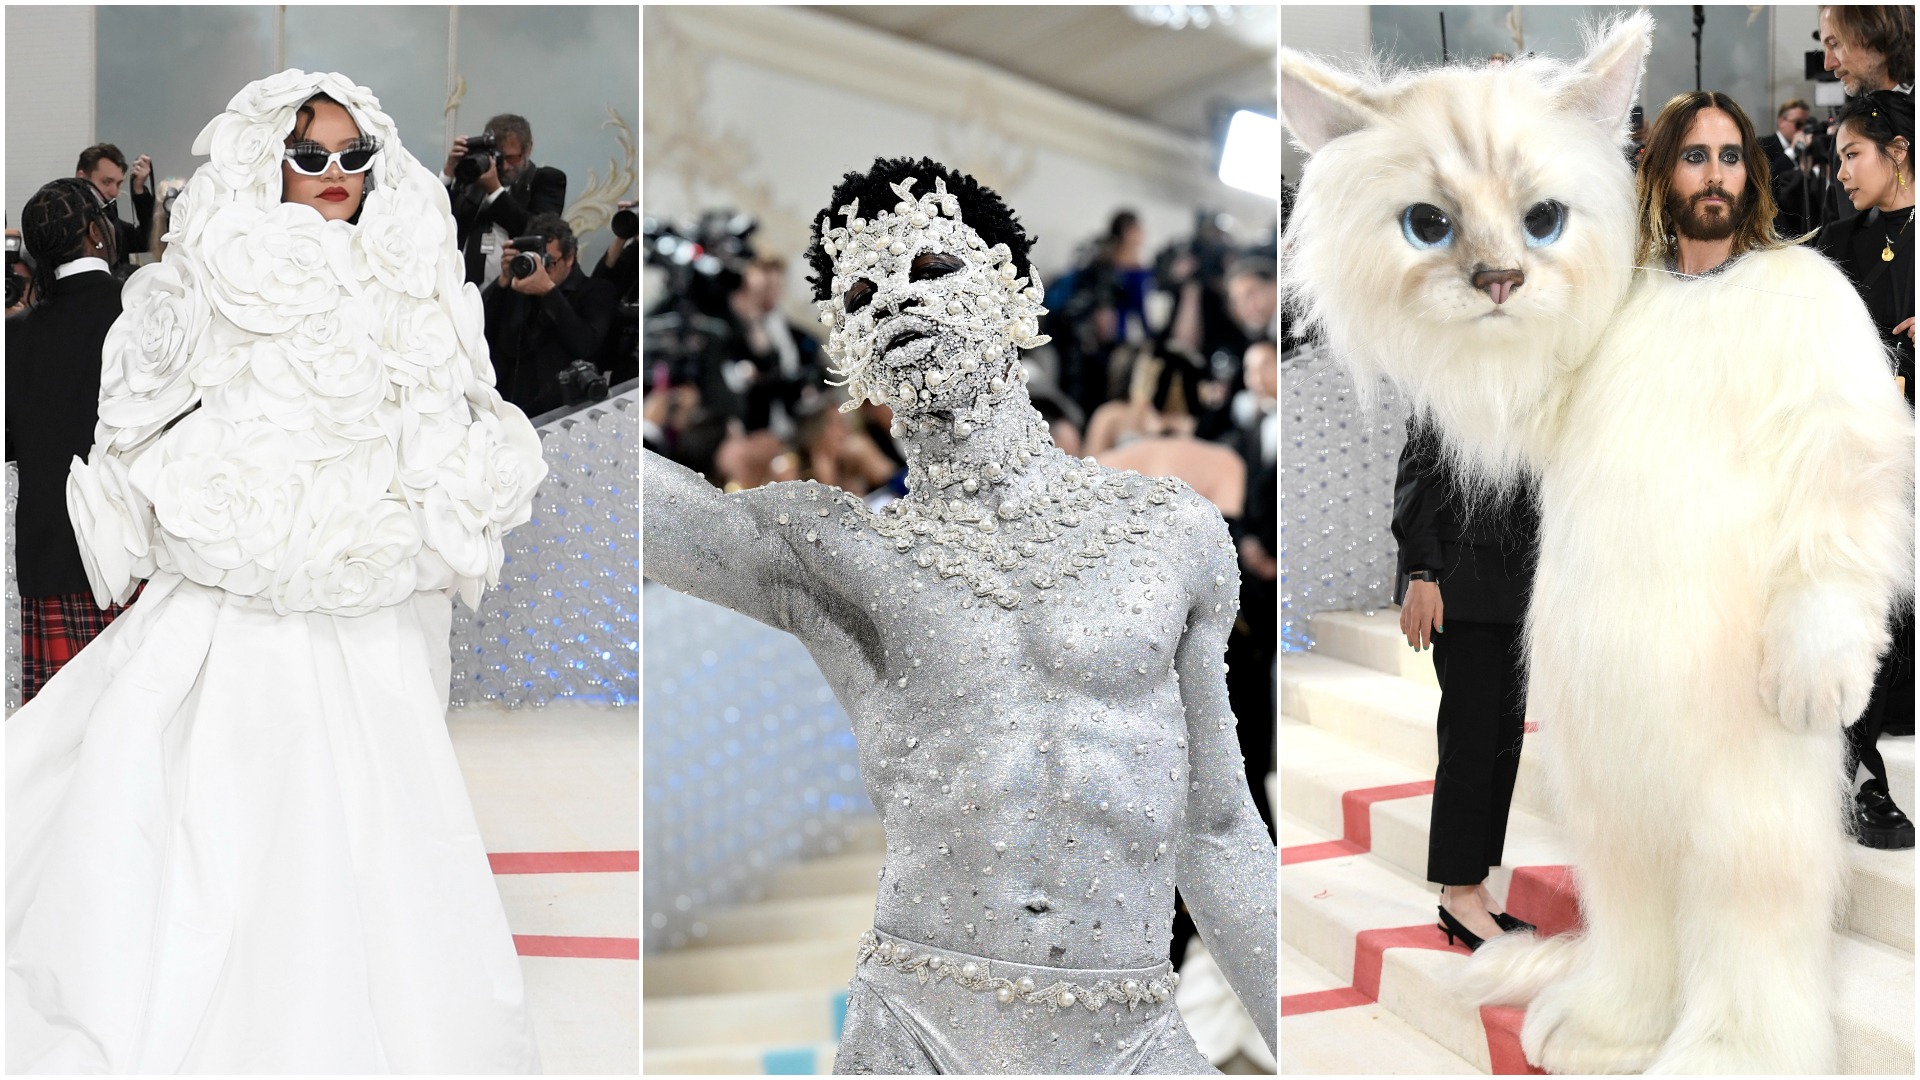 Met Gala: Feline fashion reigns as stars pay tribute to Karl Lagerfield ...